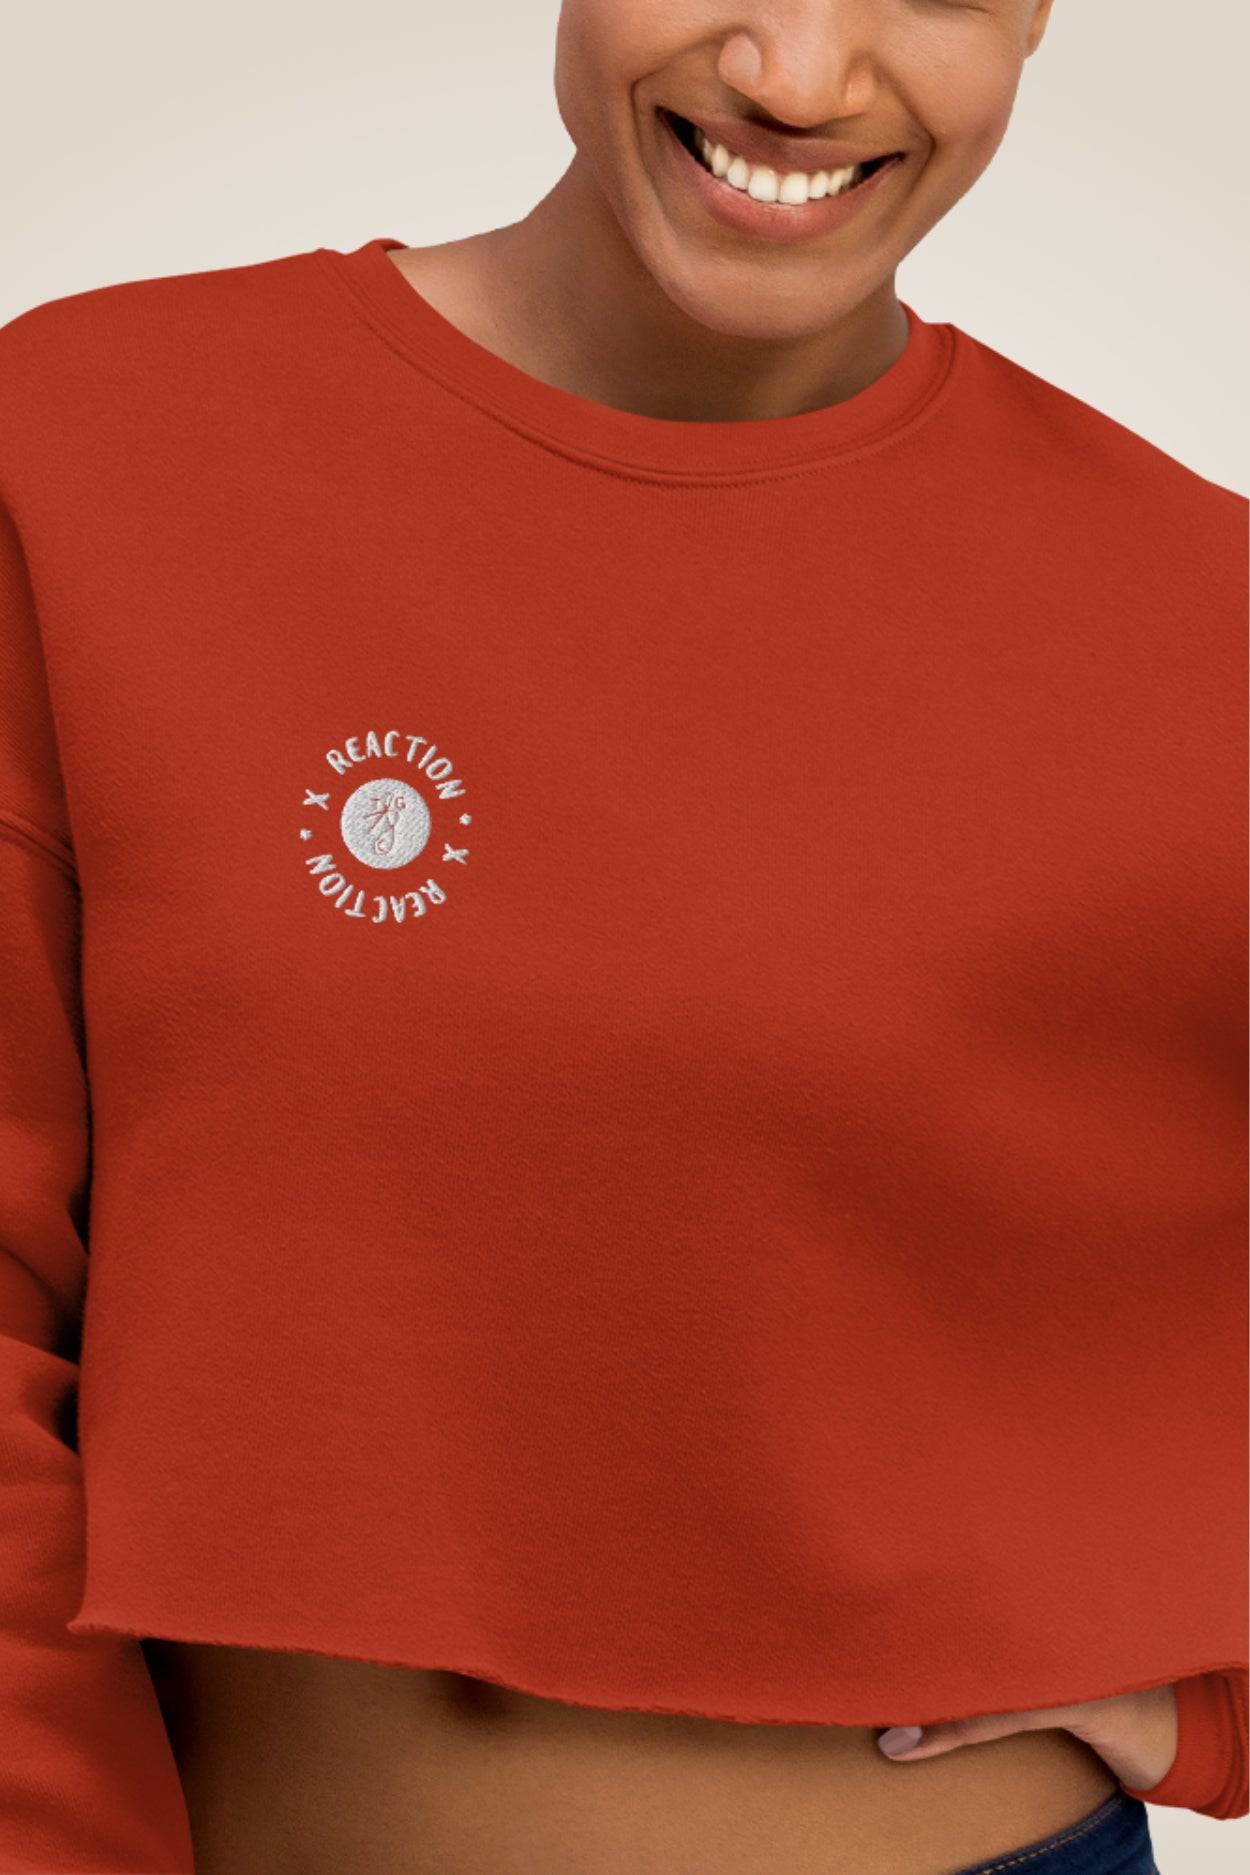 TGC X Reaction Orange Cropped Sweatshirt - TGC Boutique - Cropped Sweatshirt